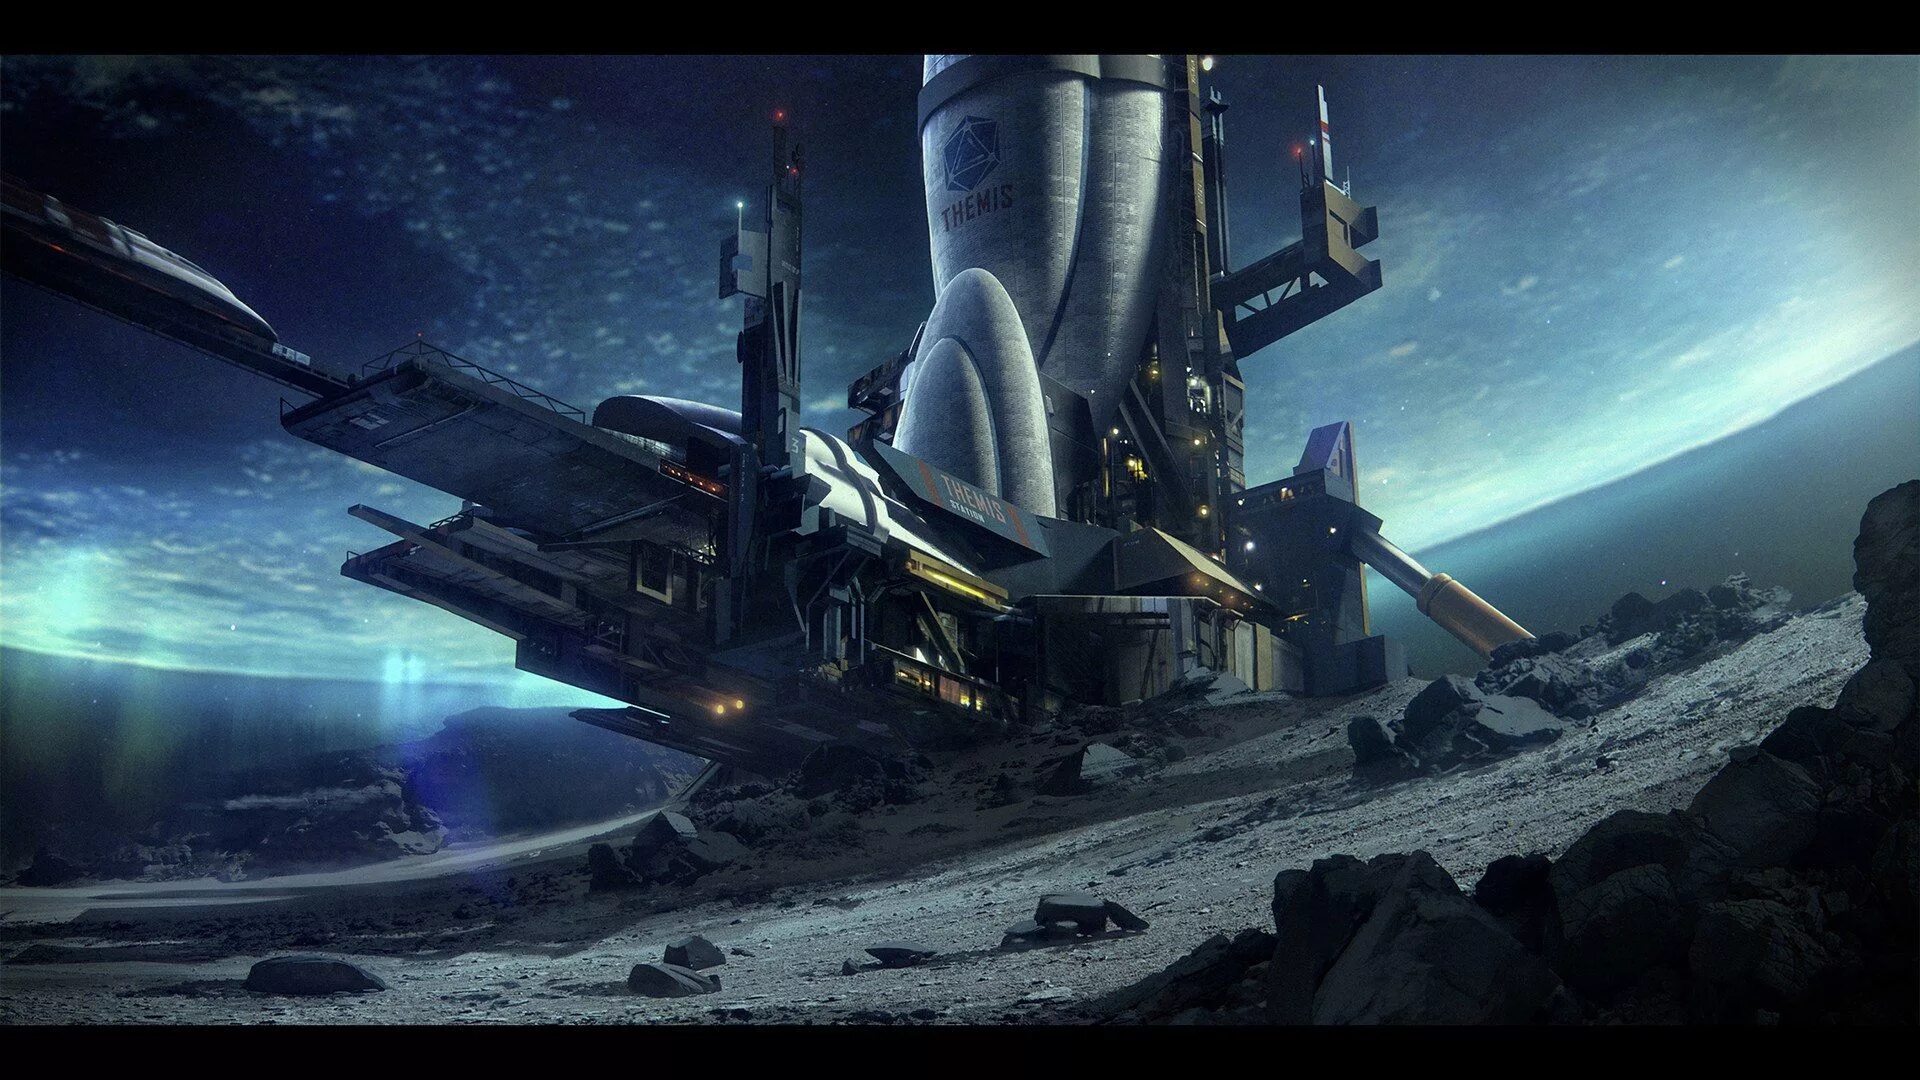 Sci fi space. Научная фантастика космический корабль. Корабли будущего. Космические корабли будущего. Космическая станция фантастика.